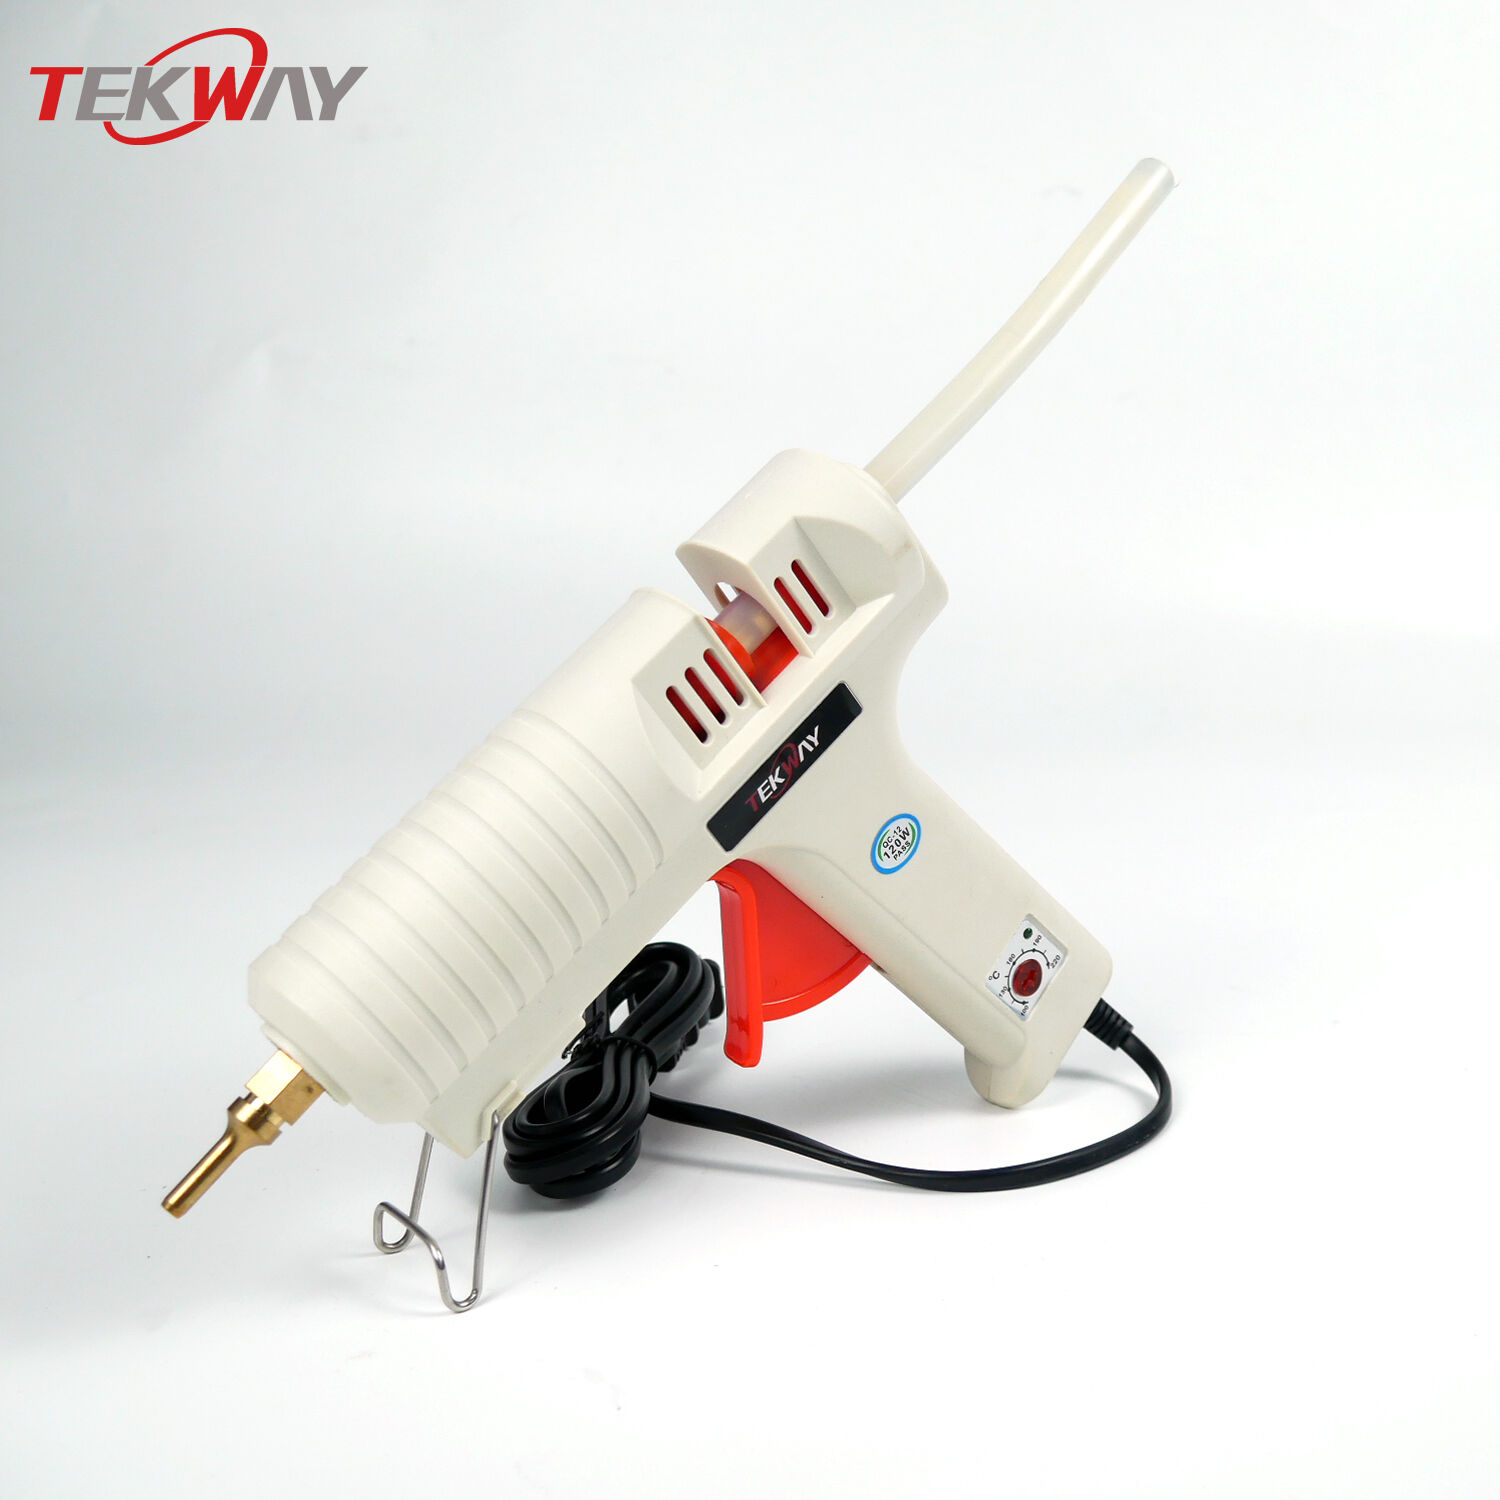 DIY Using Heat Gun Electric Power Tool 110W Temperature Gun with